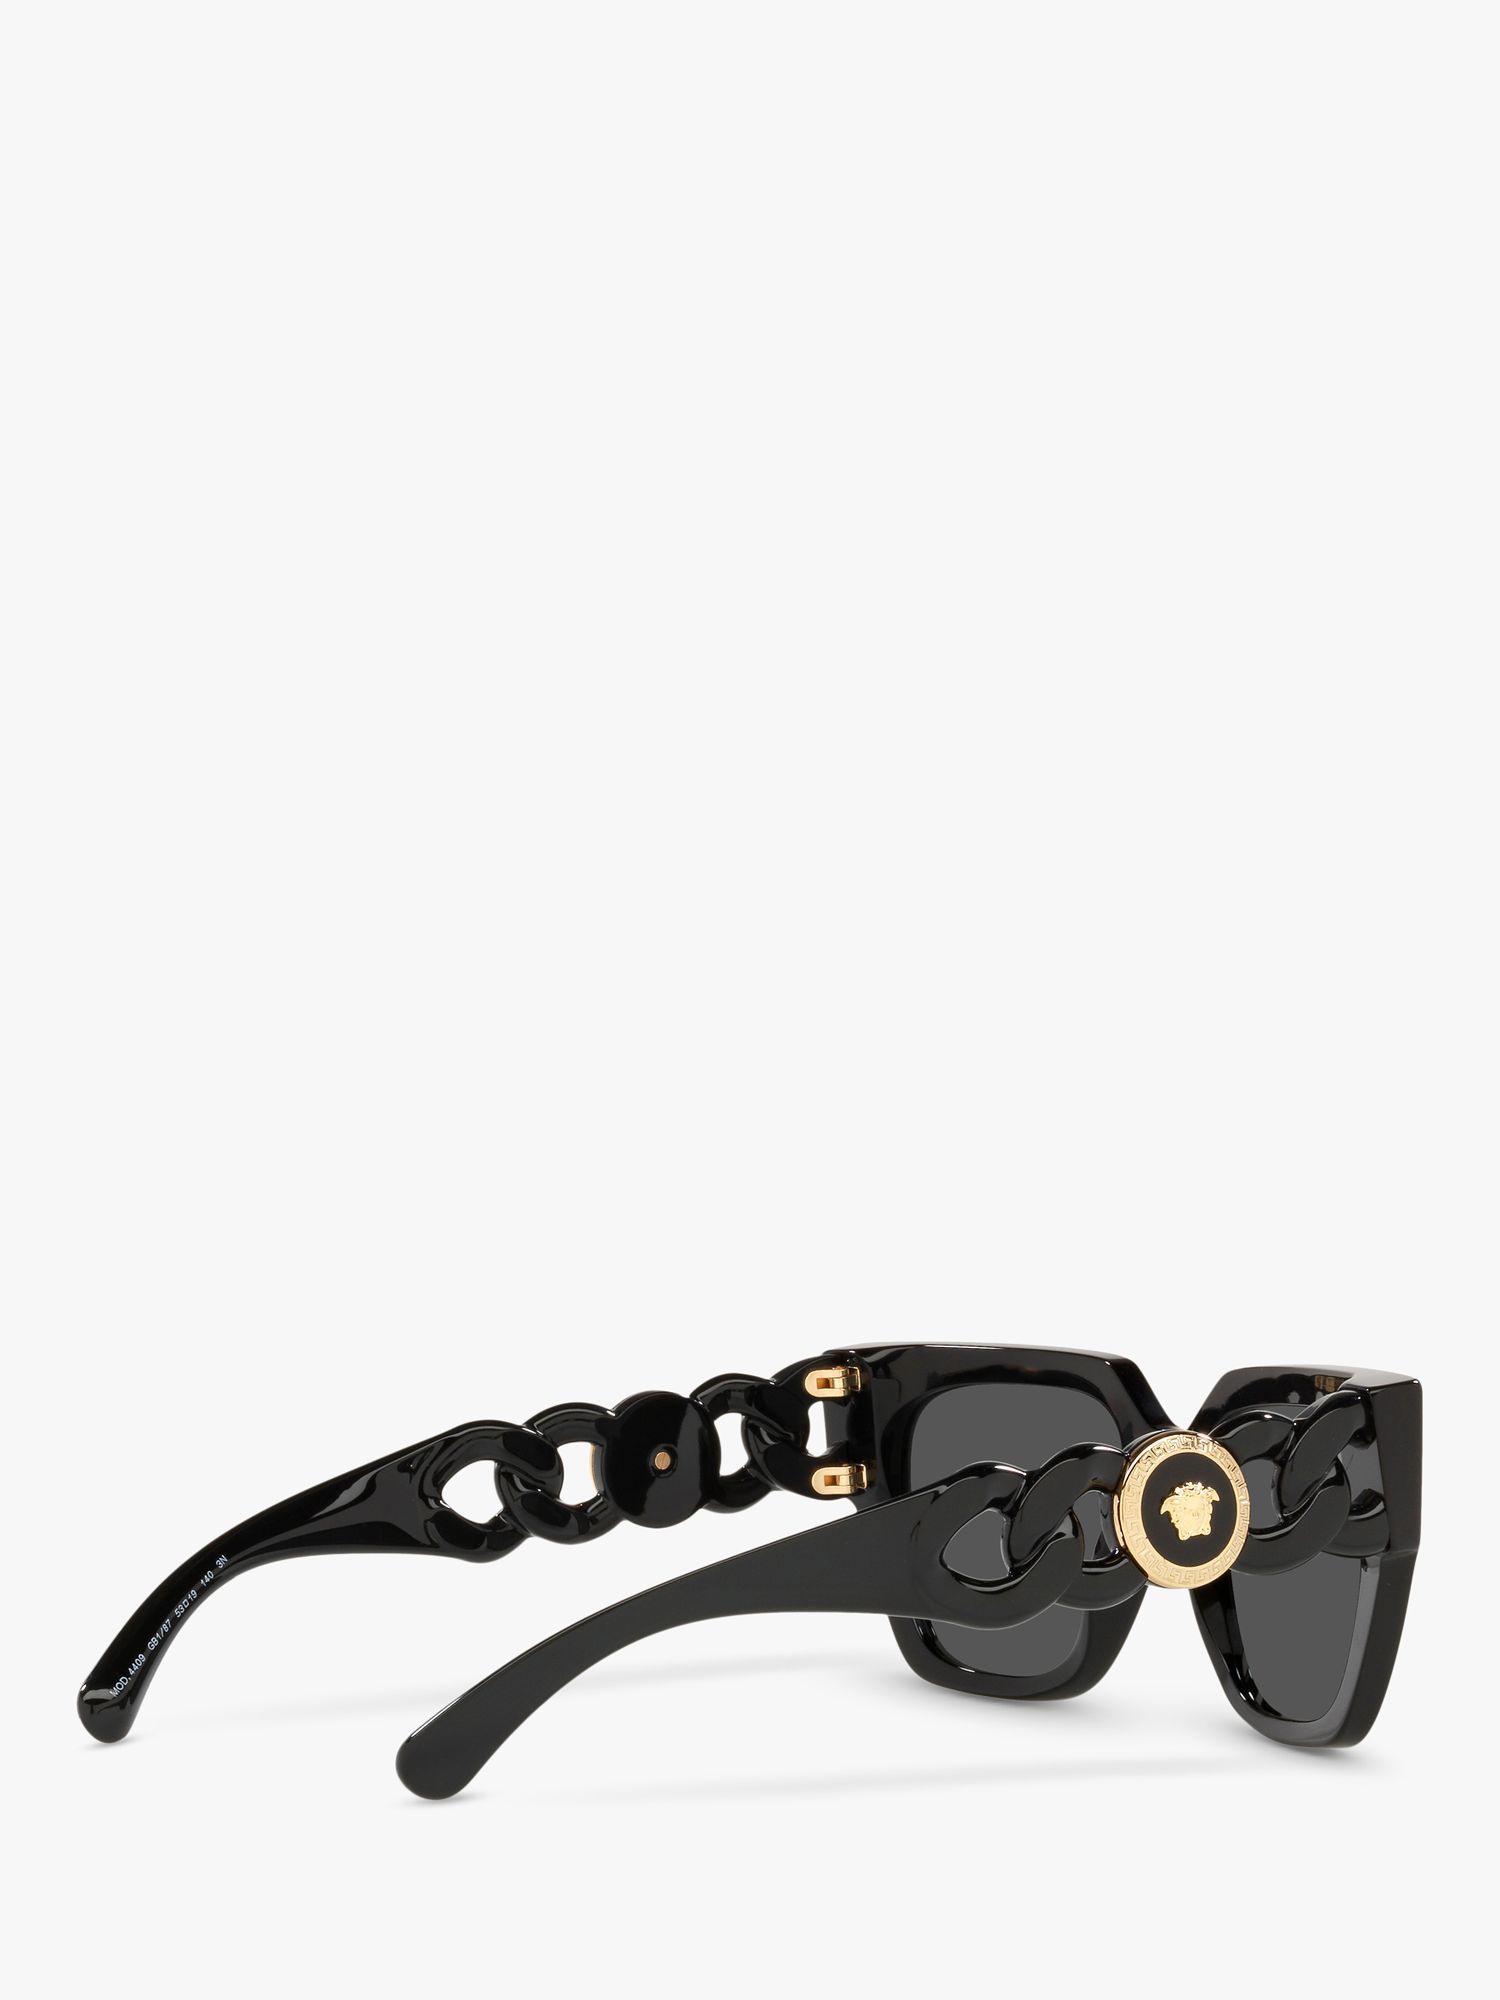 Buy Versace VE4409 Women's Square Sunglasses Online at johnlewis.com